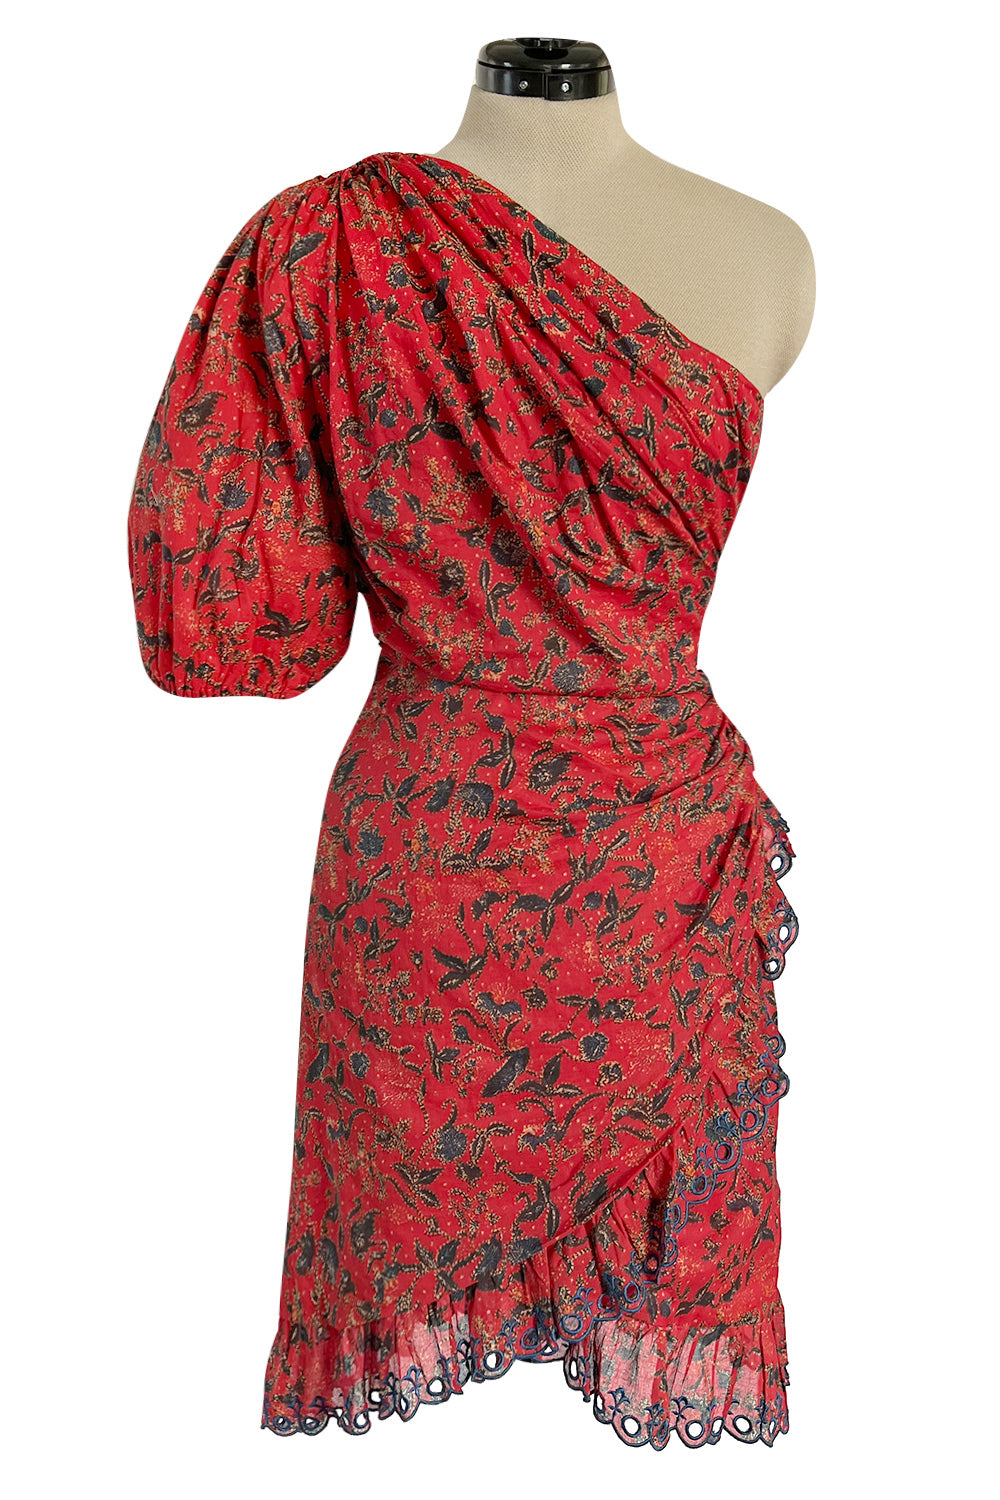 Prettiest Isabel Marant Esther One Shoulder Red Floral – Shrimpton Couture